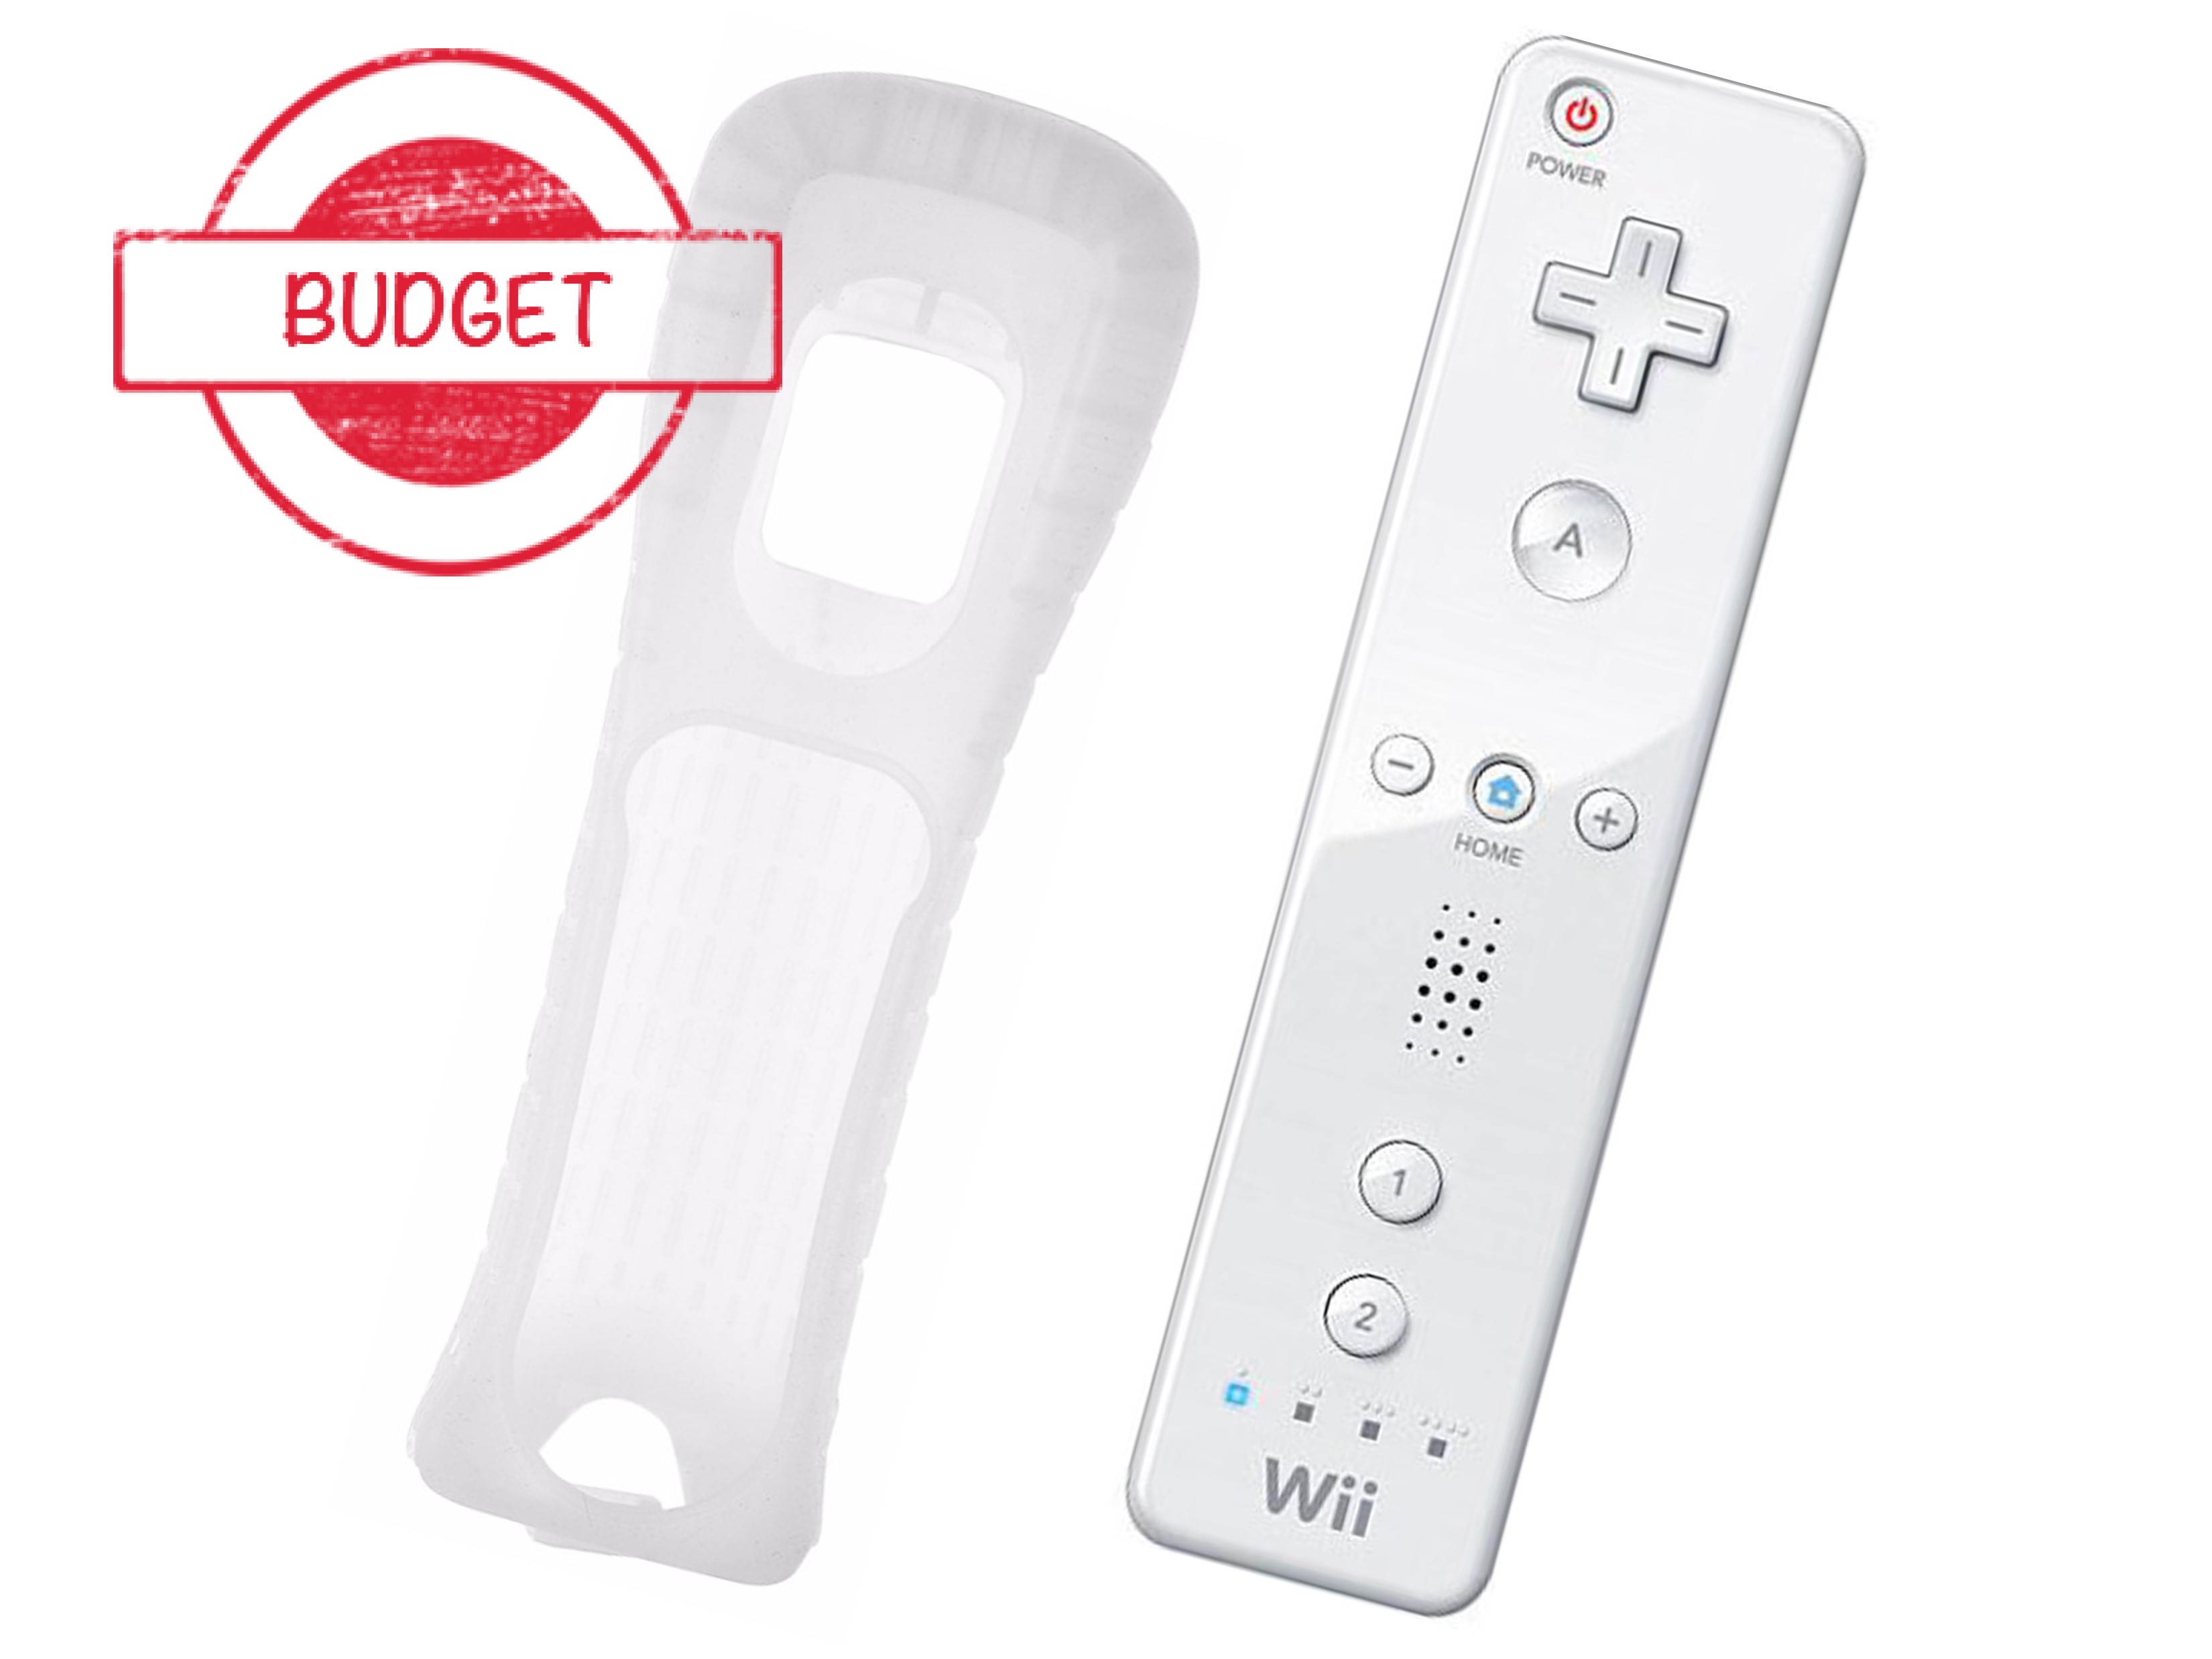 Nintendo Wii U Starter Pack - Just Dance 2014 Edition - Budget - Wii U Hardware - 4